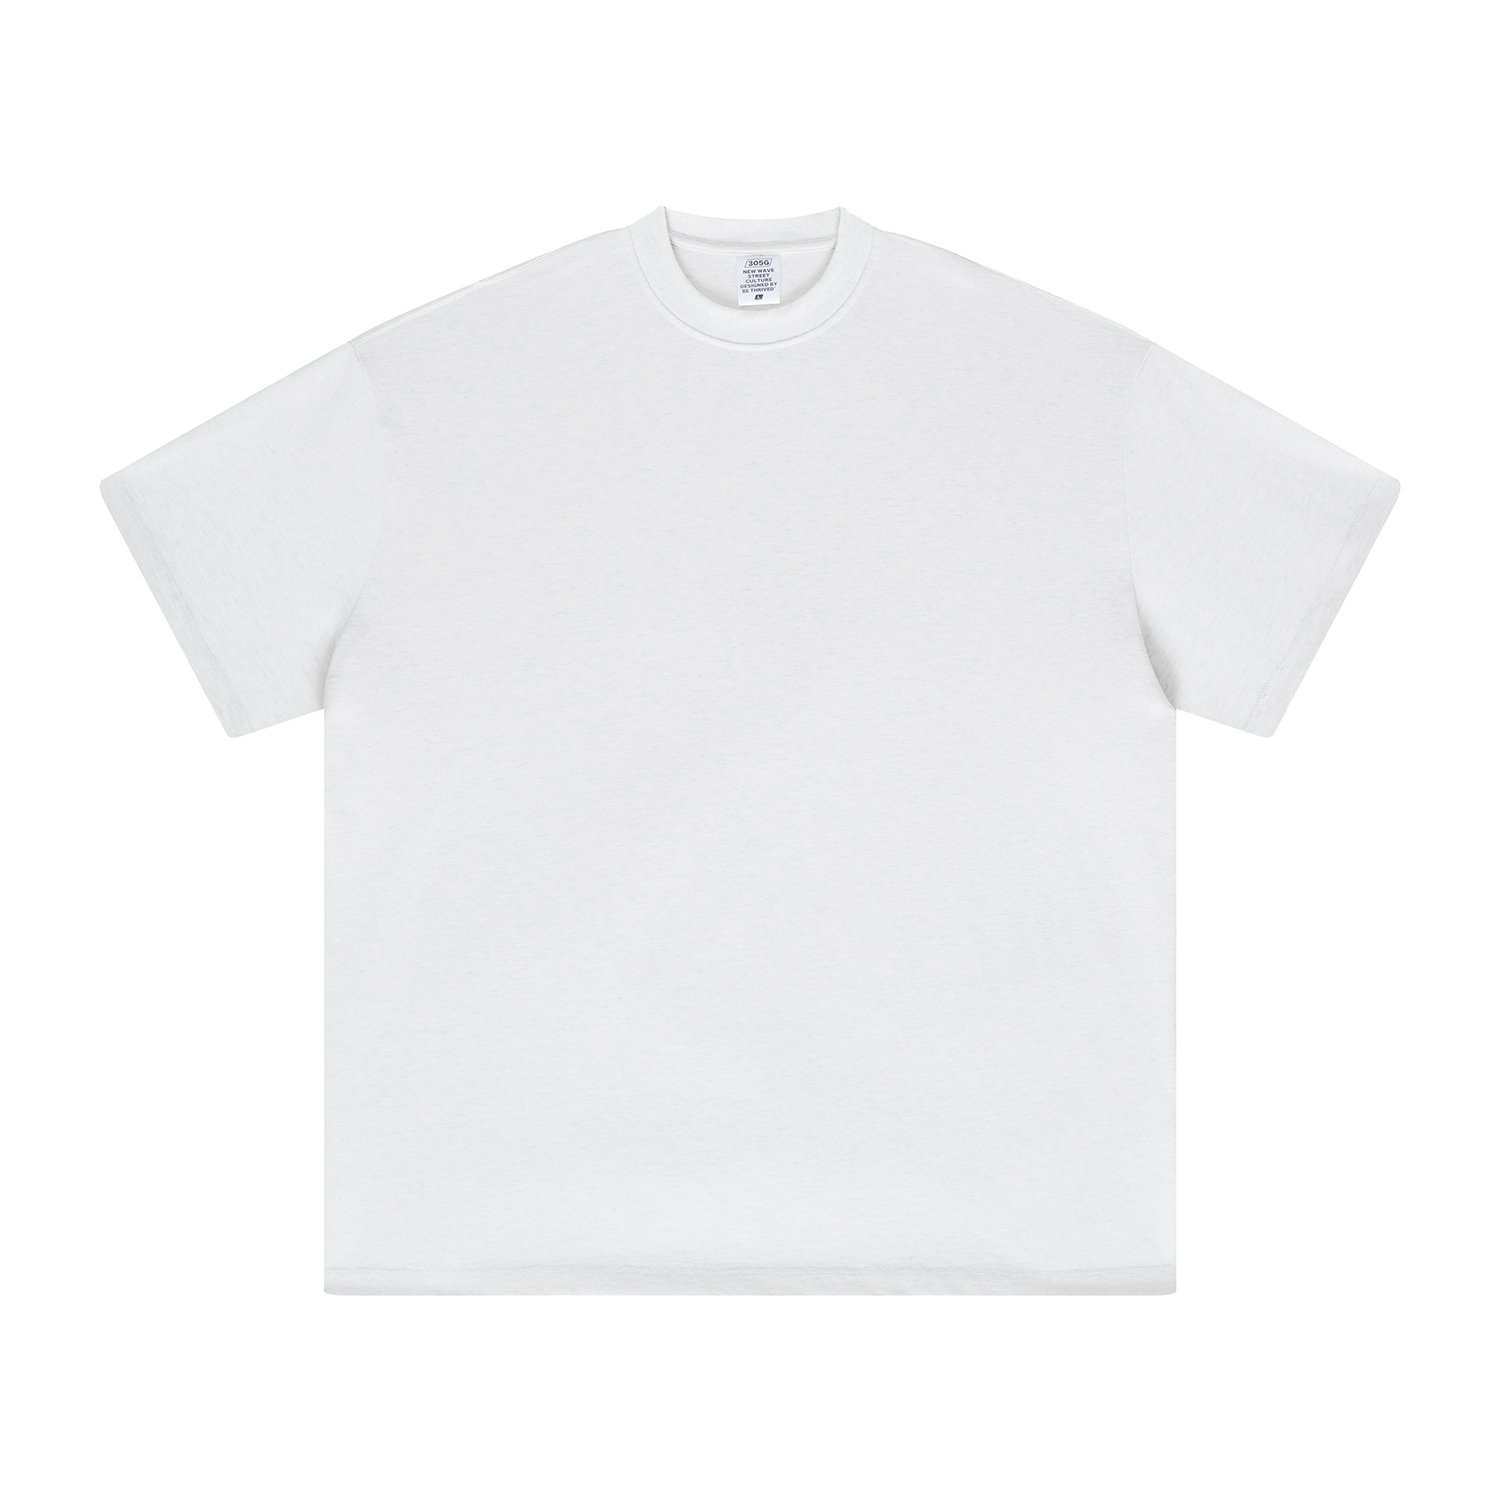 Streetwear Unisex Basic Earth Tone 100% Cotton T-Shirt - Print On Demand | HugePOD-18